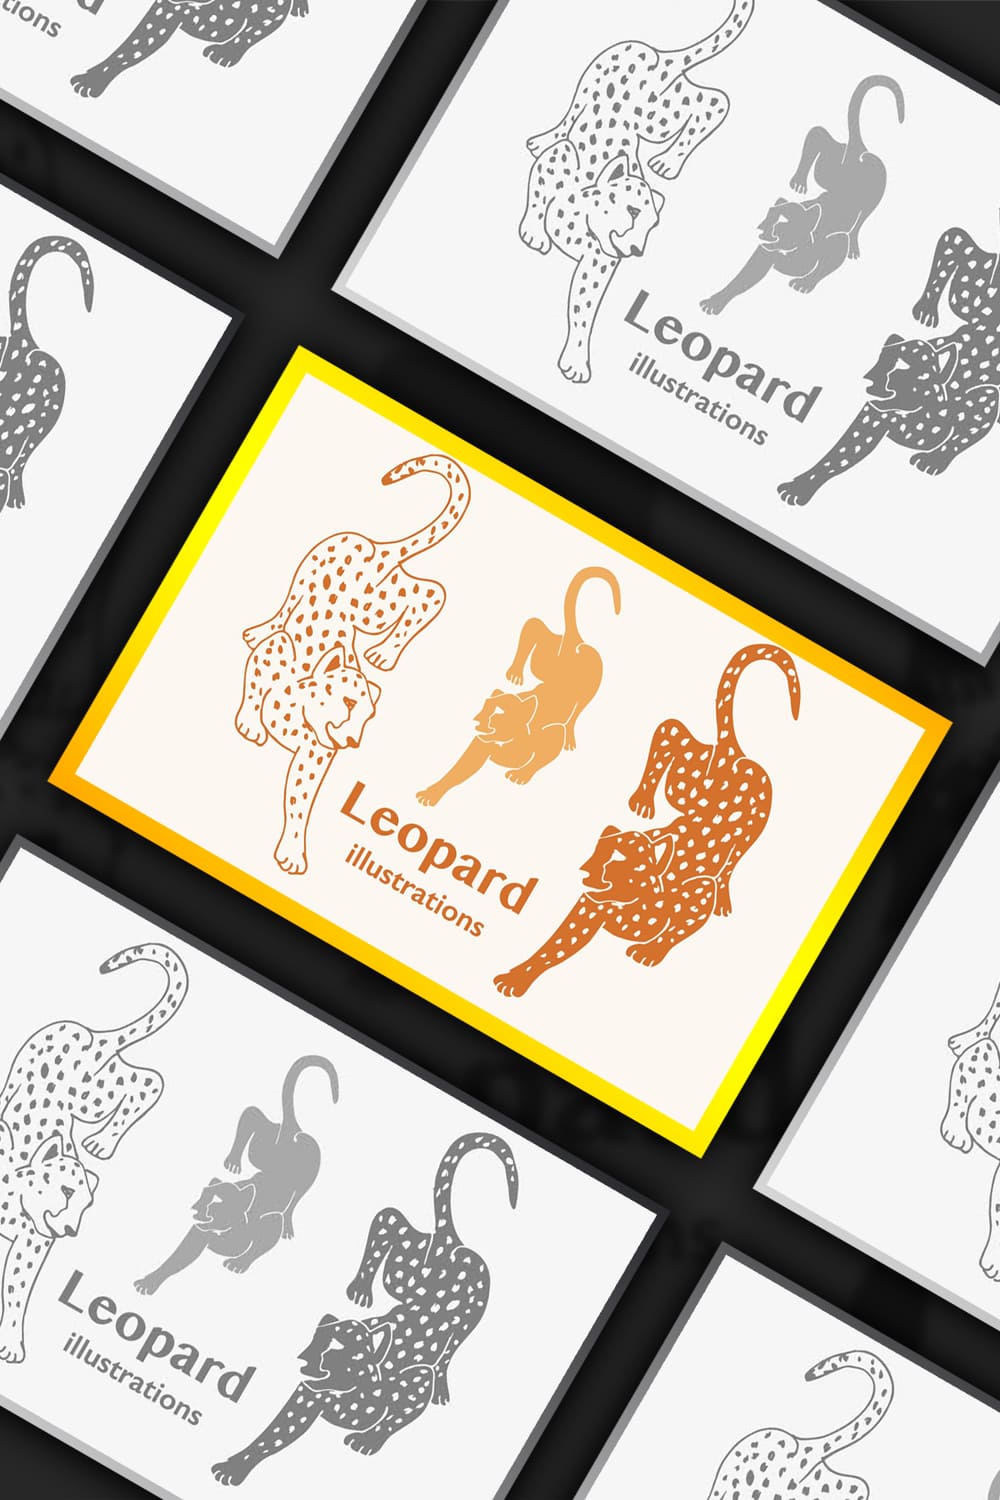 Illustration Of A Leopard/Panther - Pinterest.